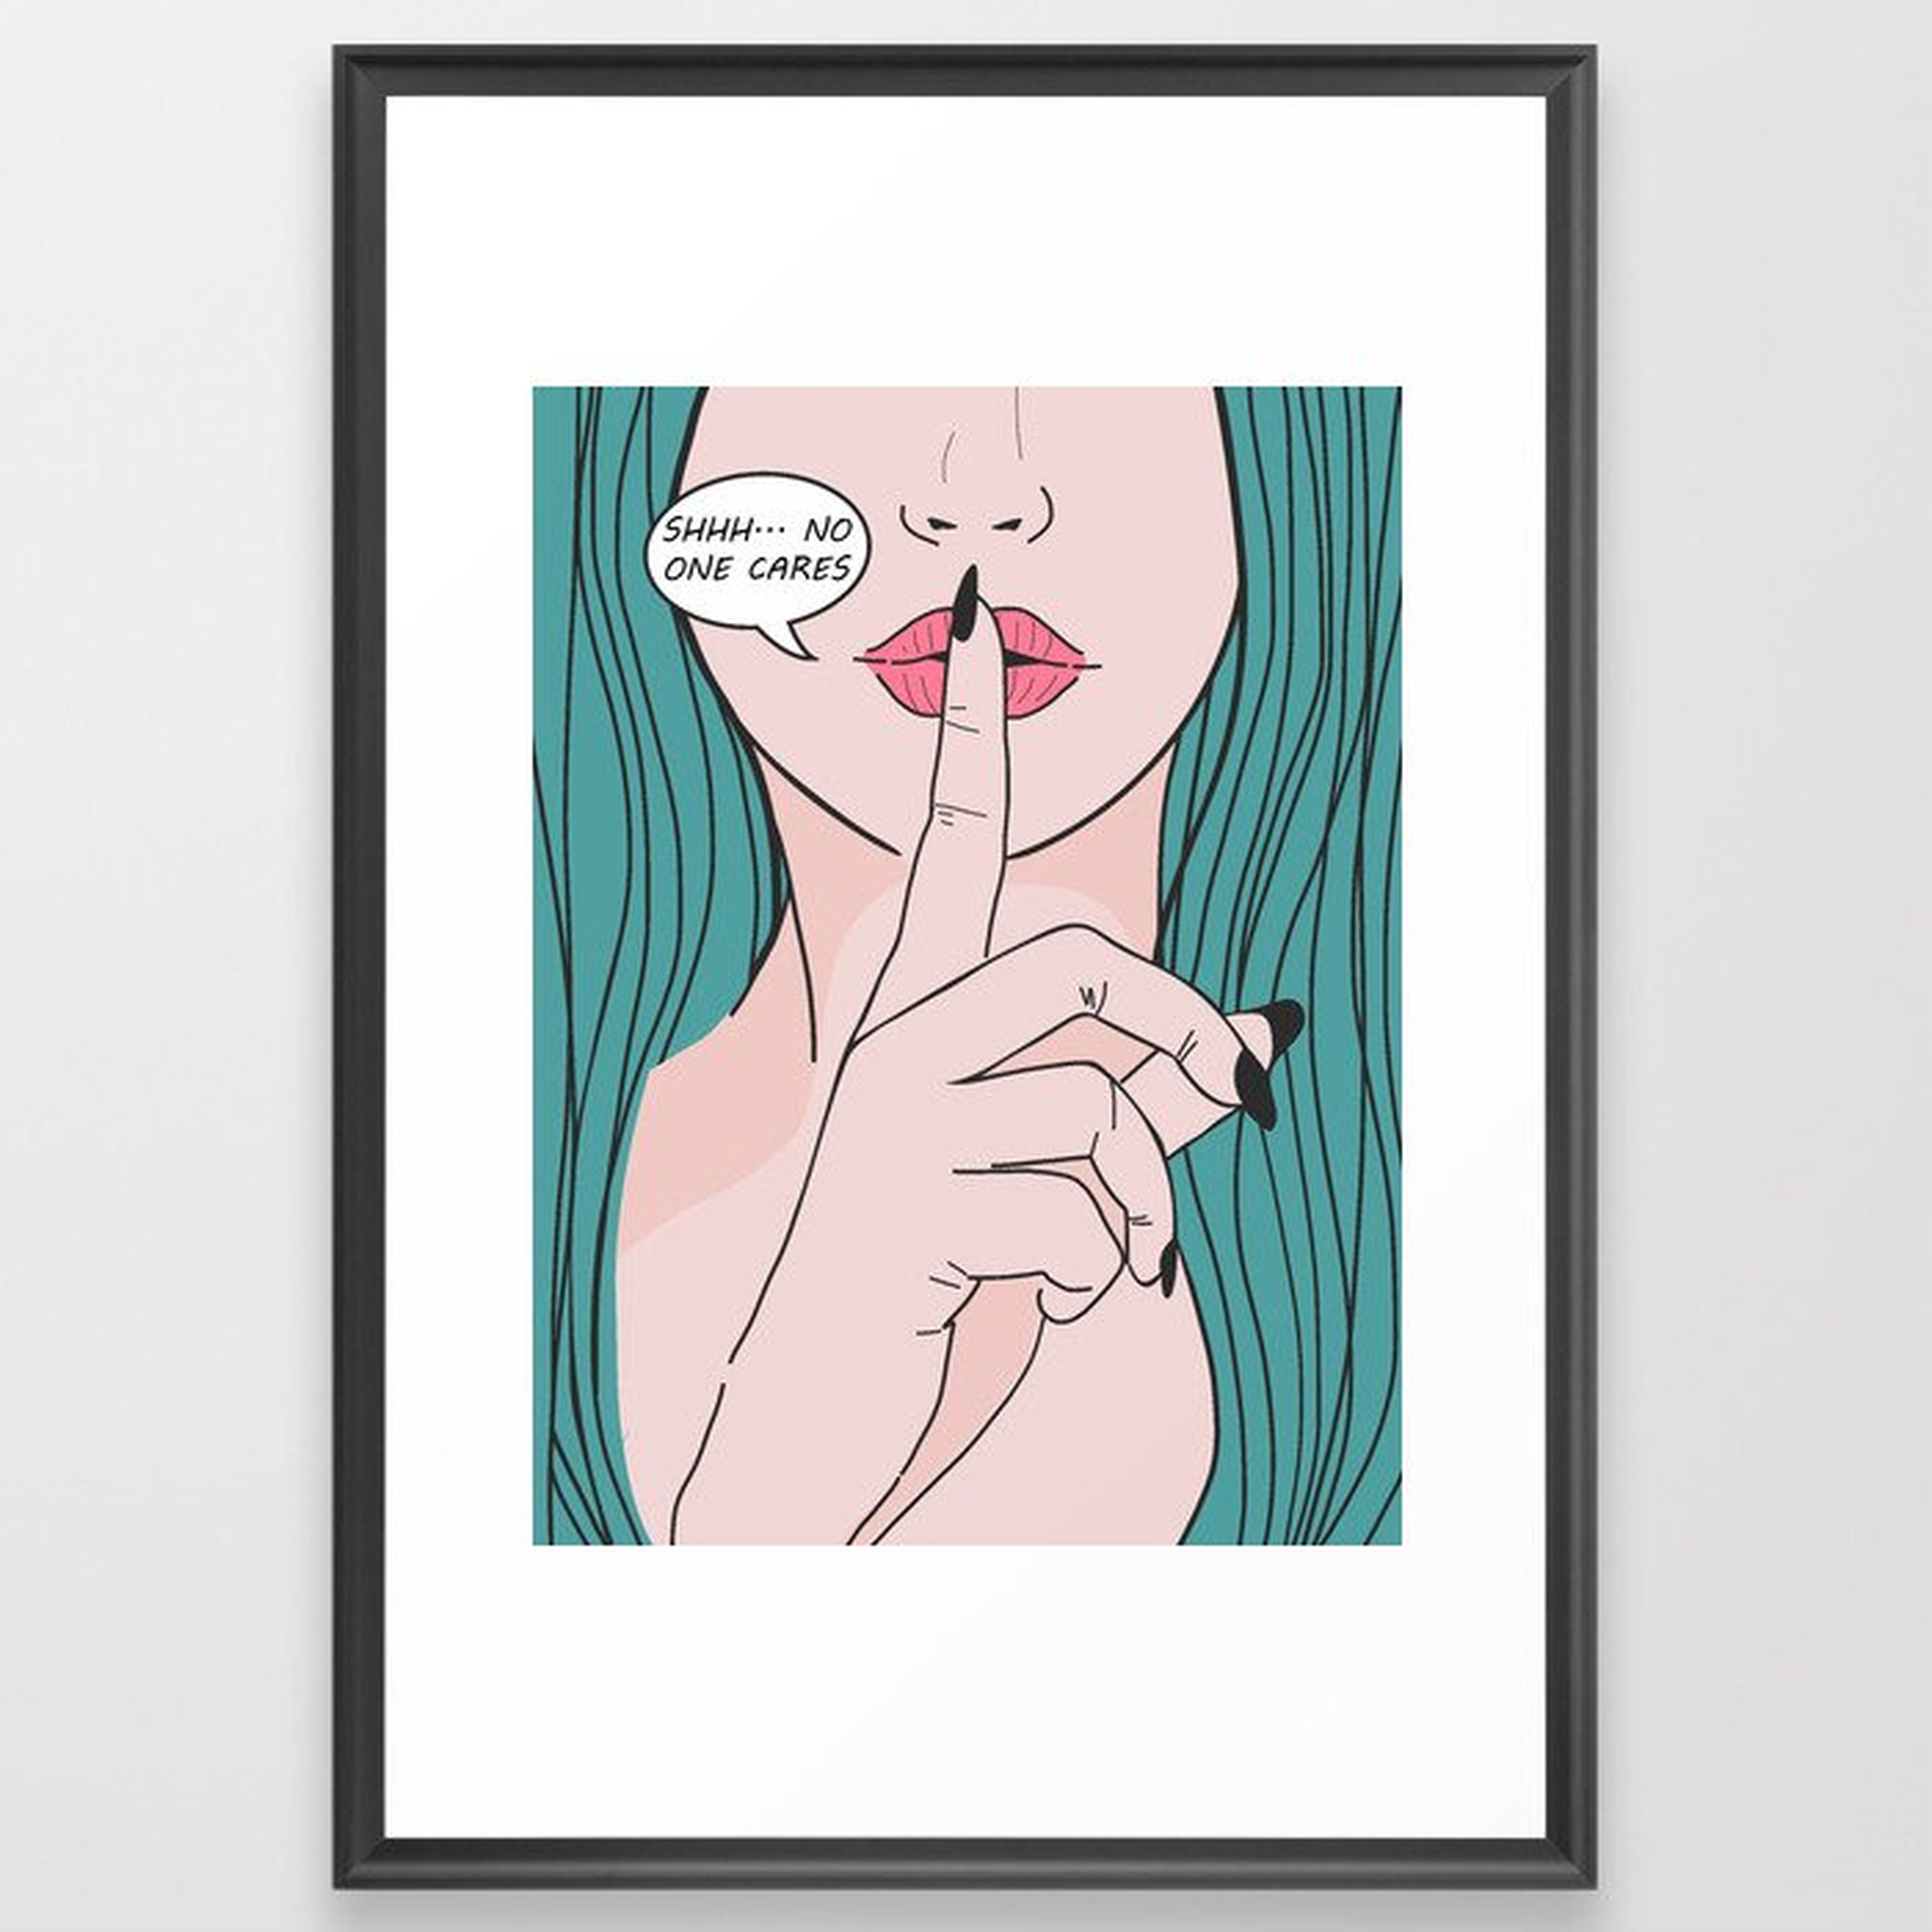 She says Shhh Framed Art Print - Society6